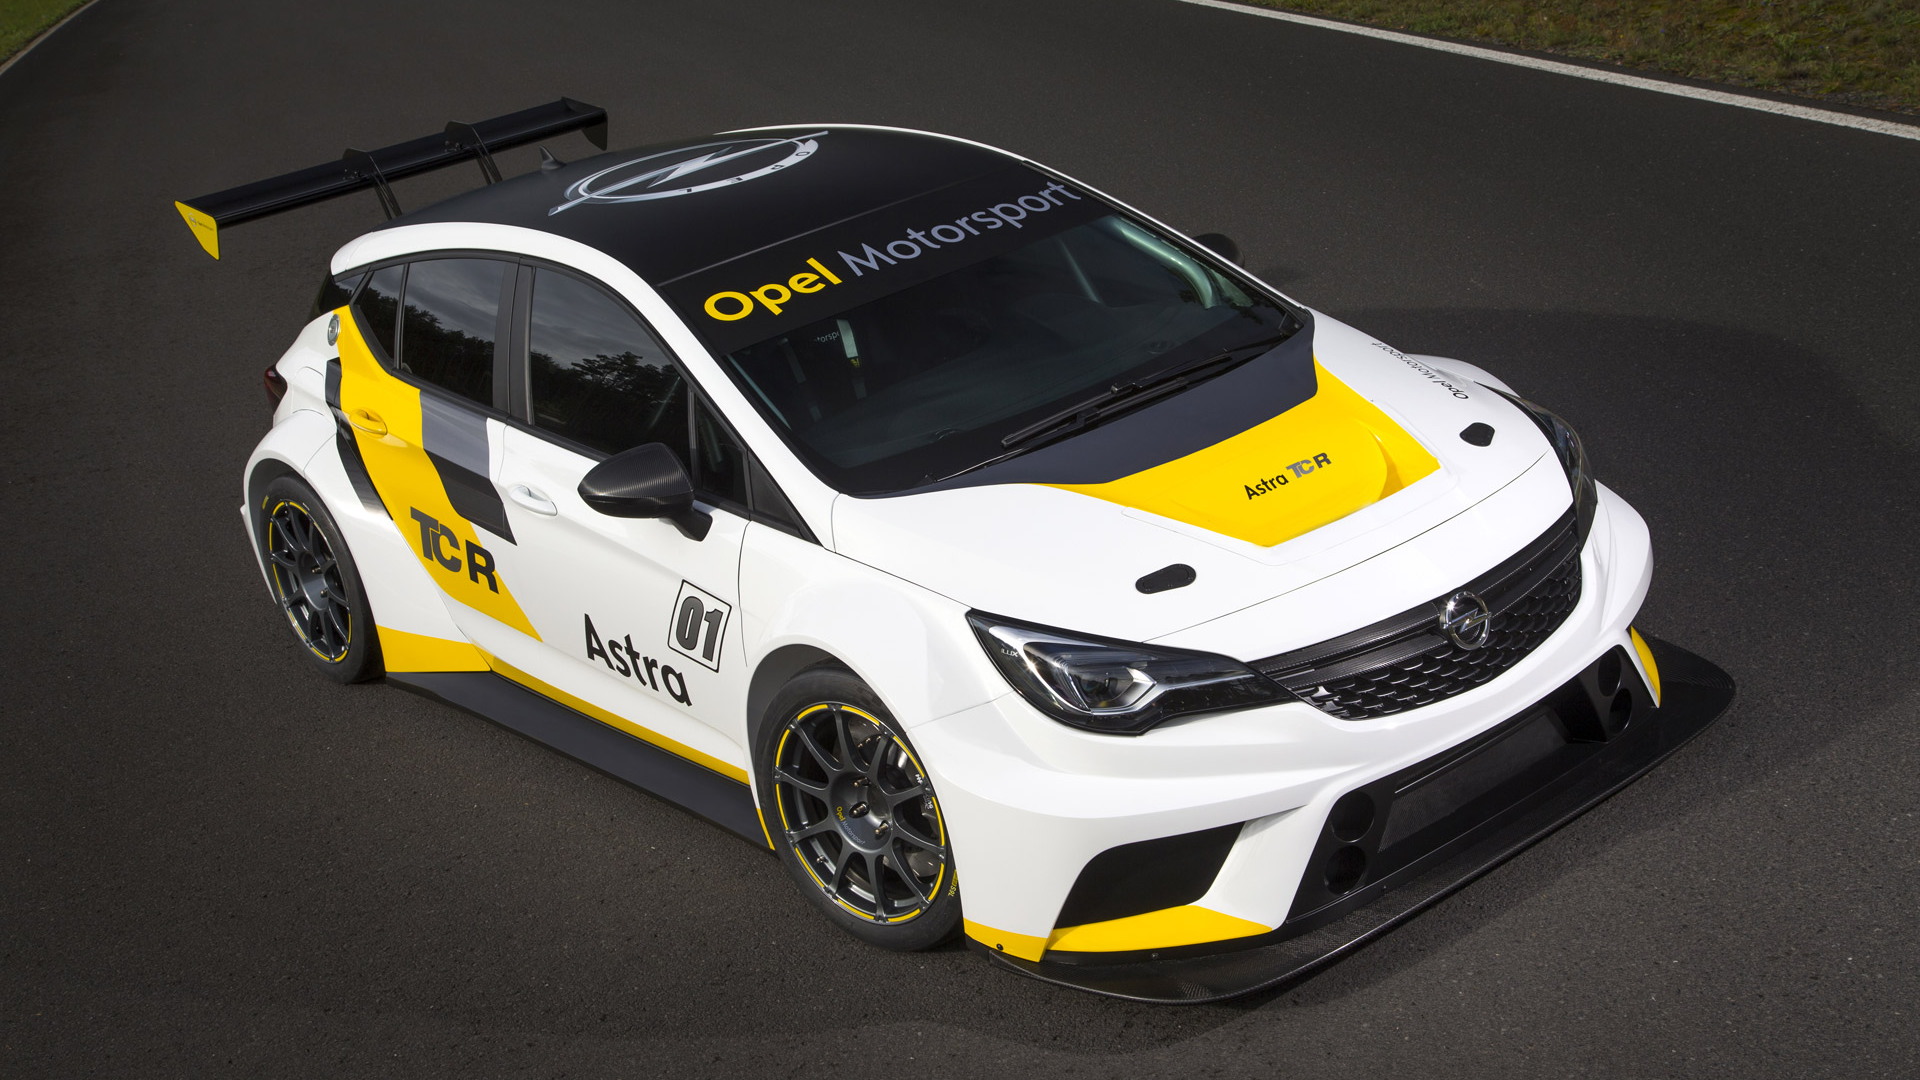 2016 Opel Astra TCR race car